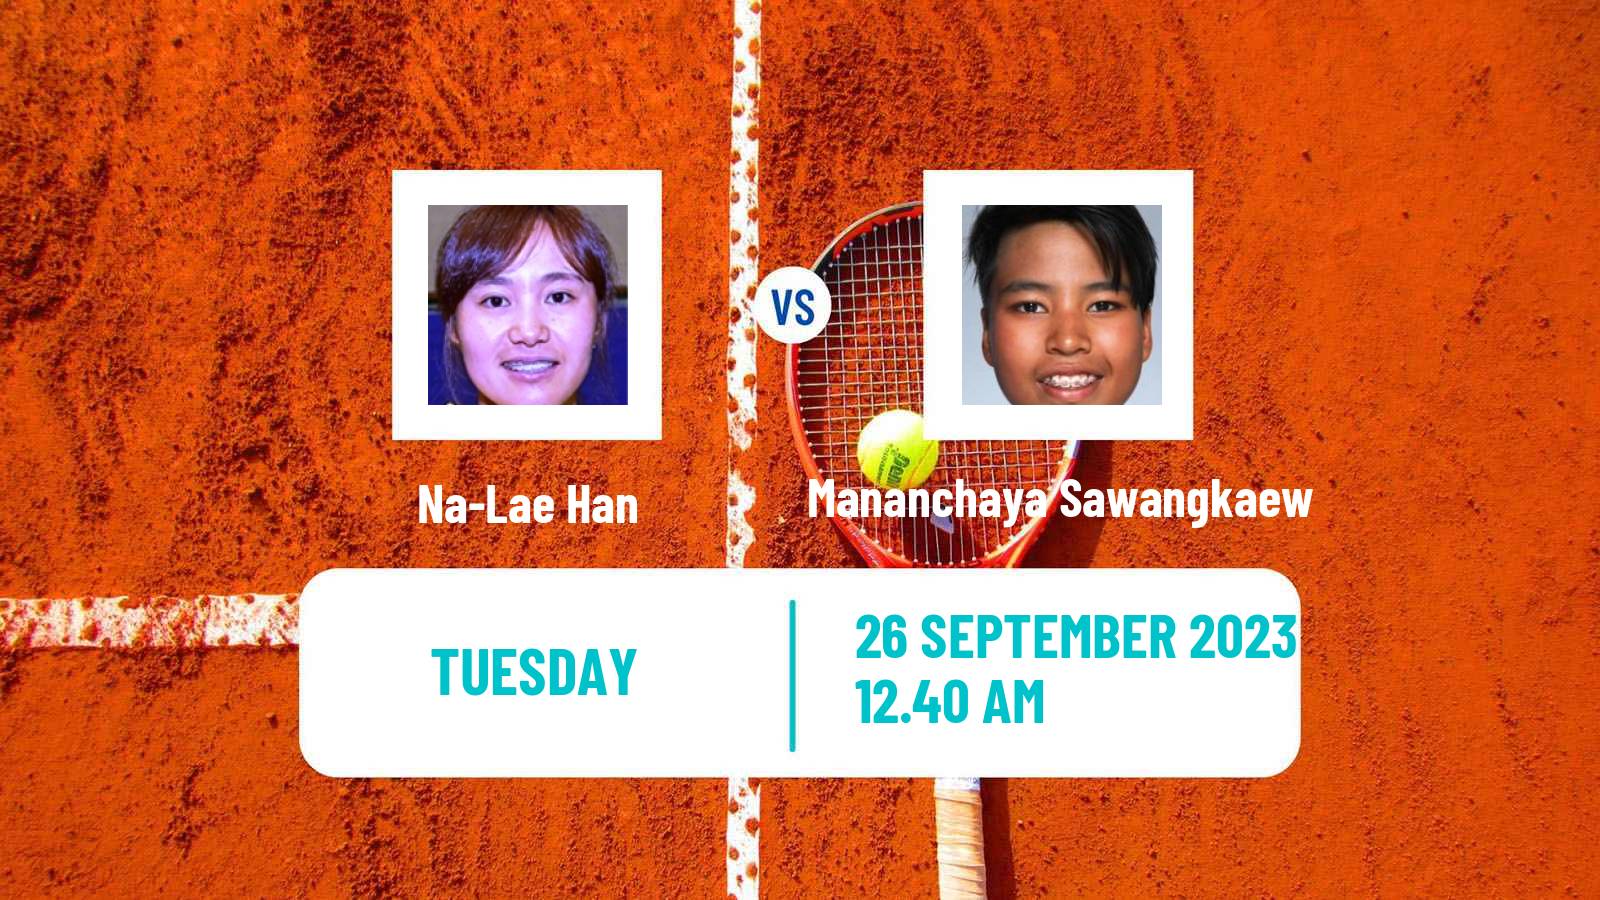 Tennis WTA Asian Games Na-Lae Han - Mananchaya Sawangkaew